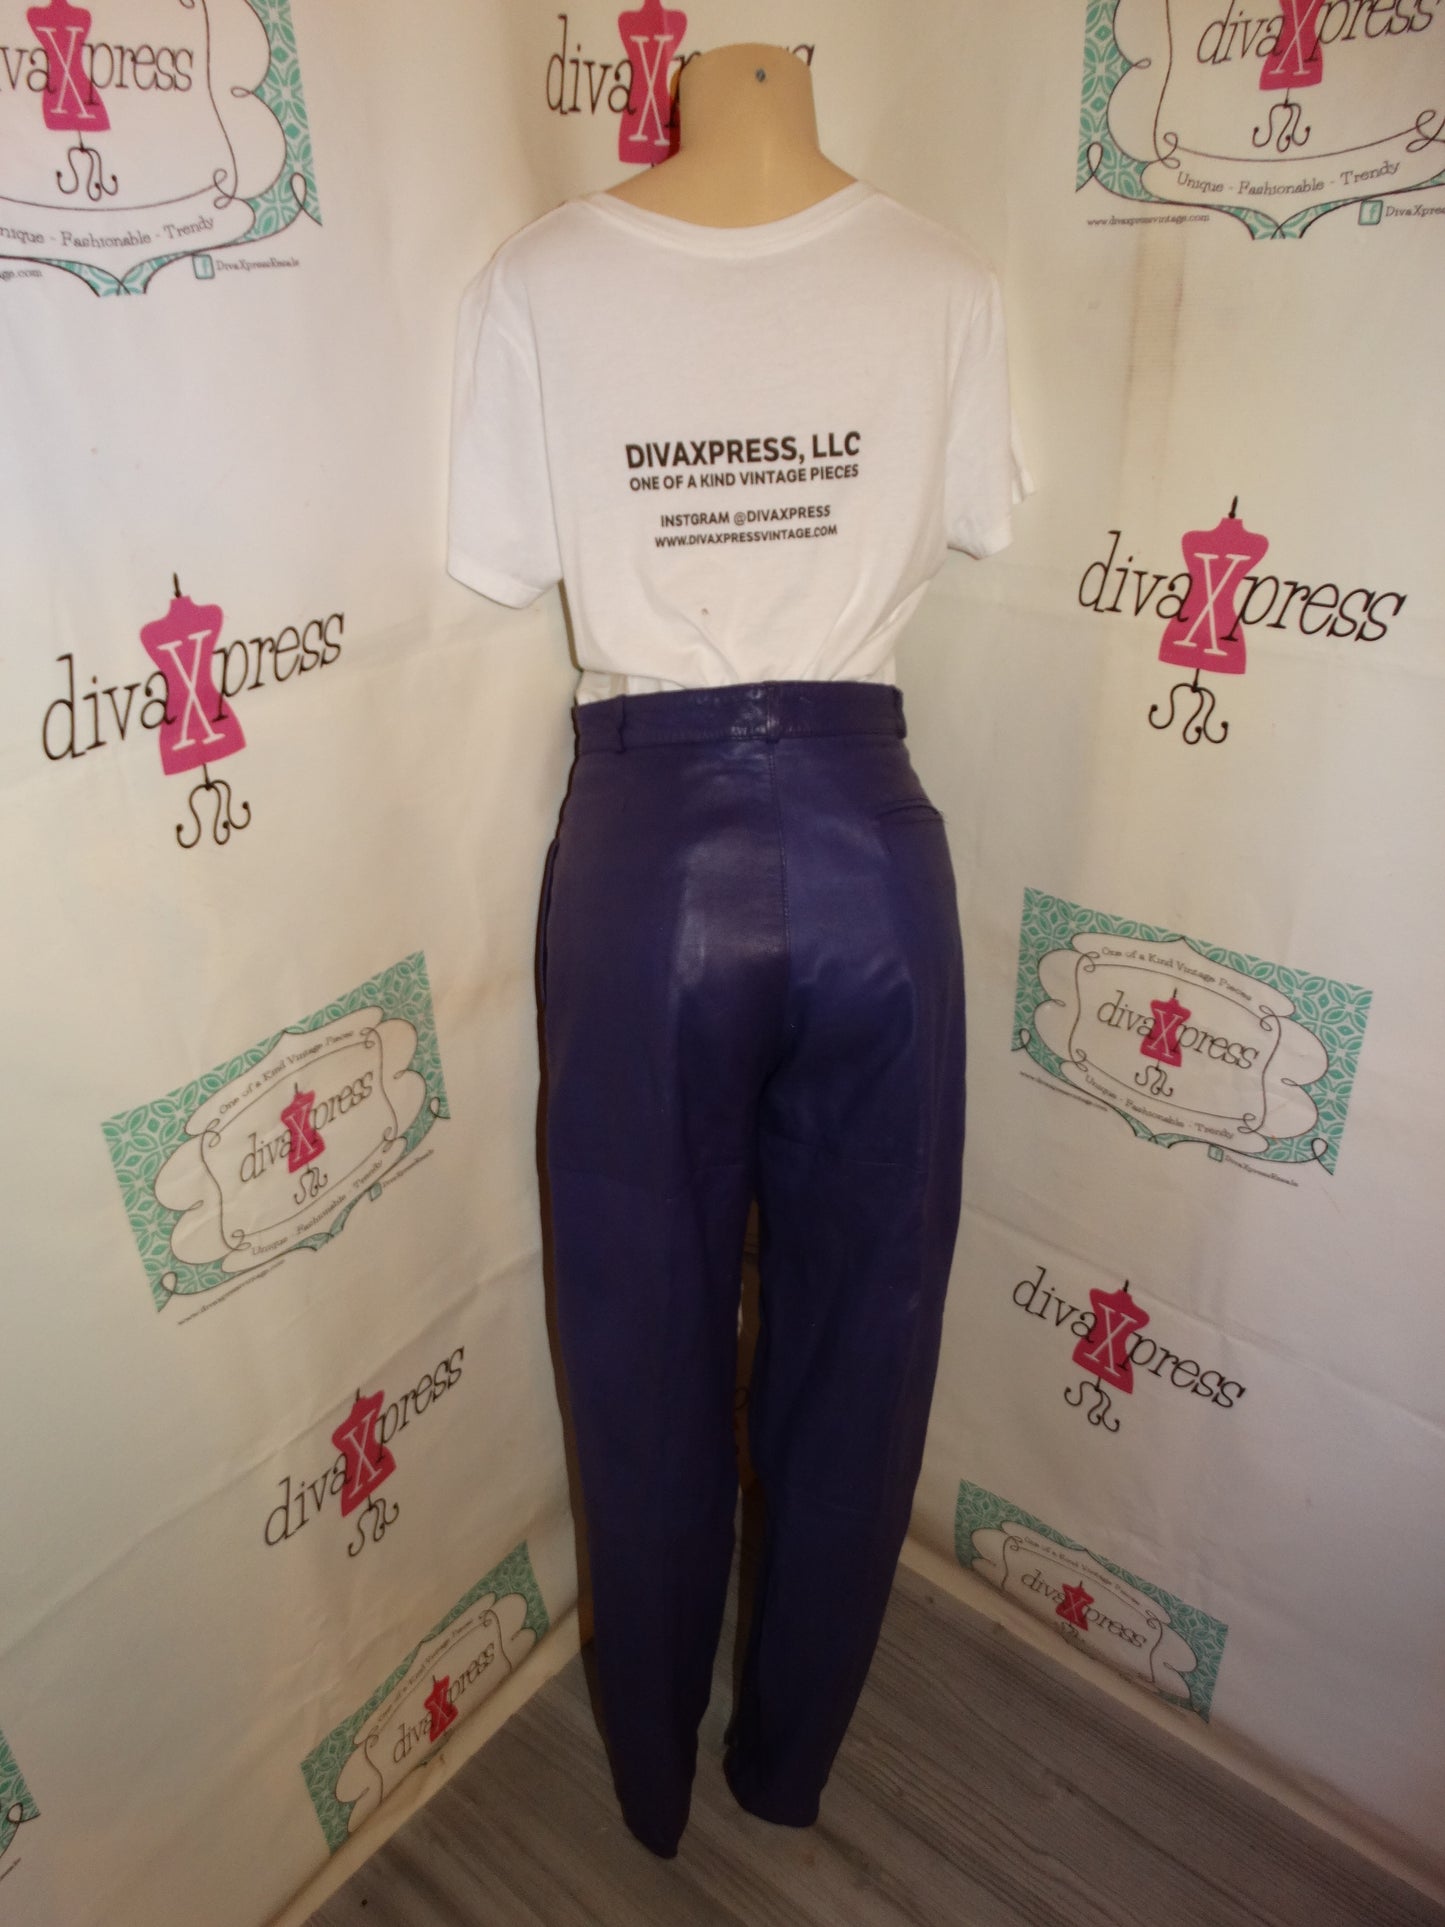 Vintage Marco Gianni Purple Leather Pants Size M